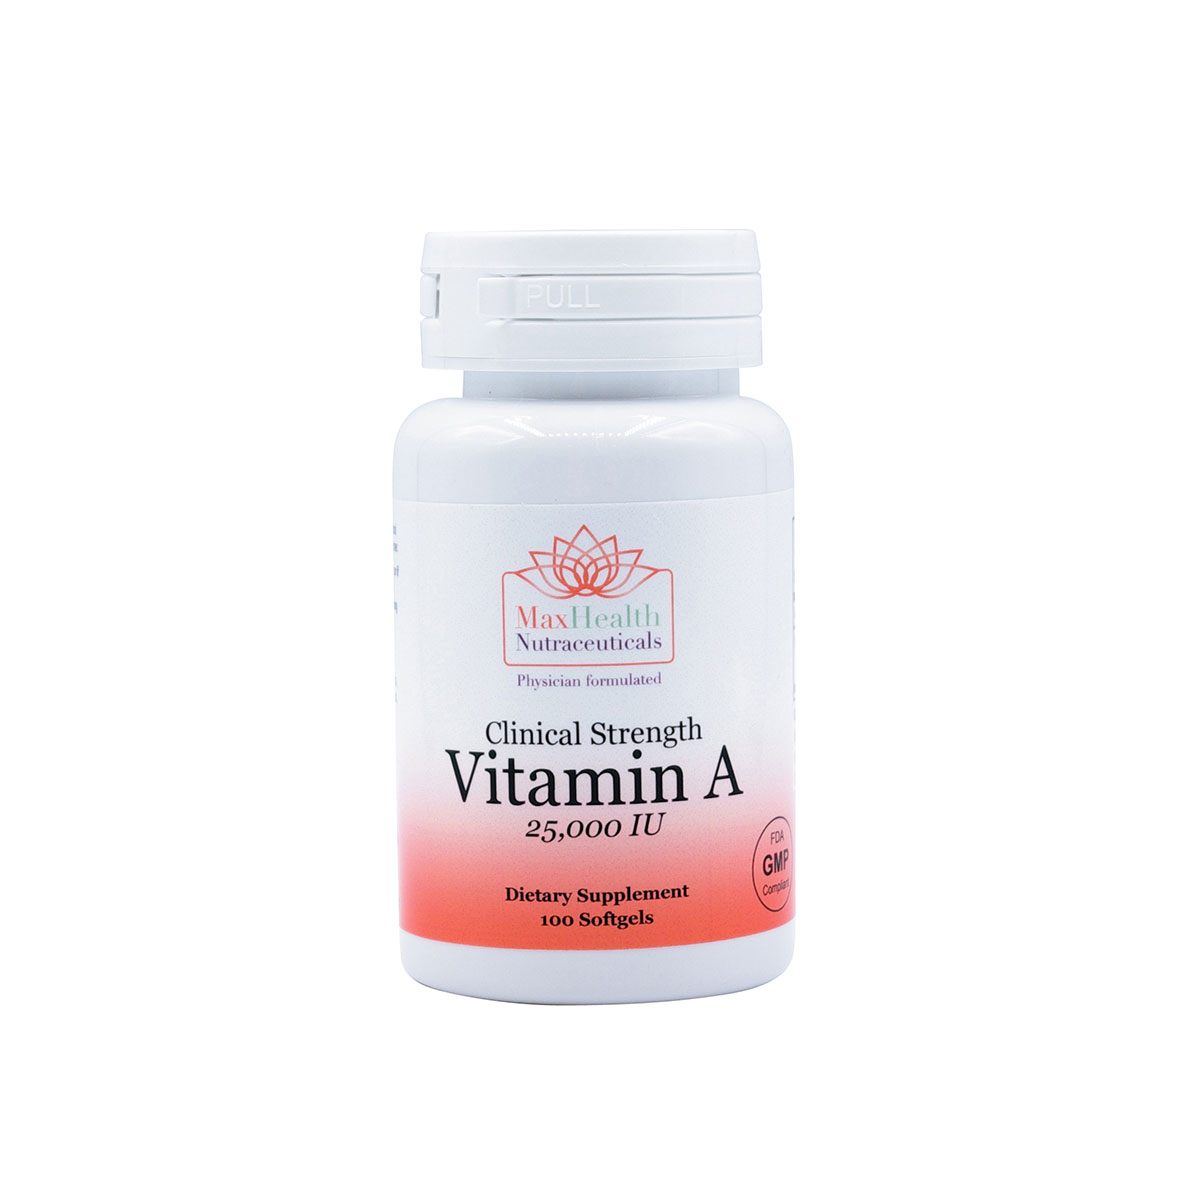 11Clinical Strength Vitamin A 25,000 IU Softgels